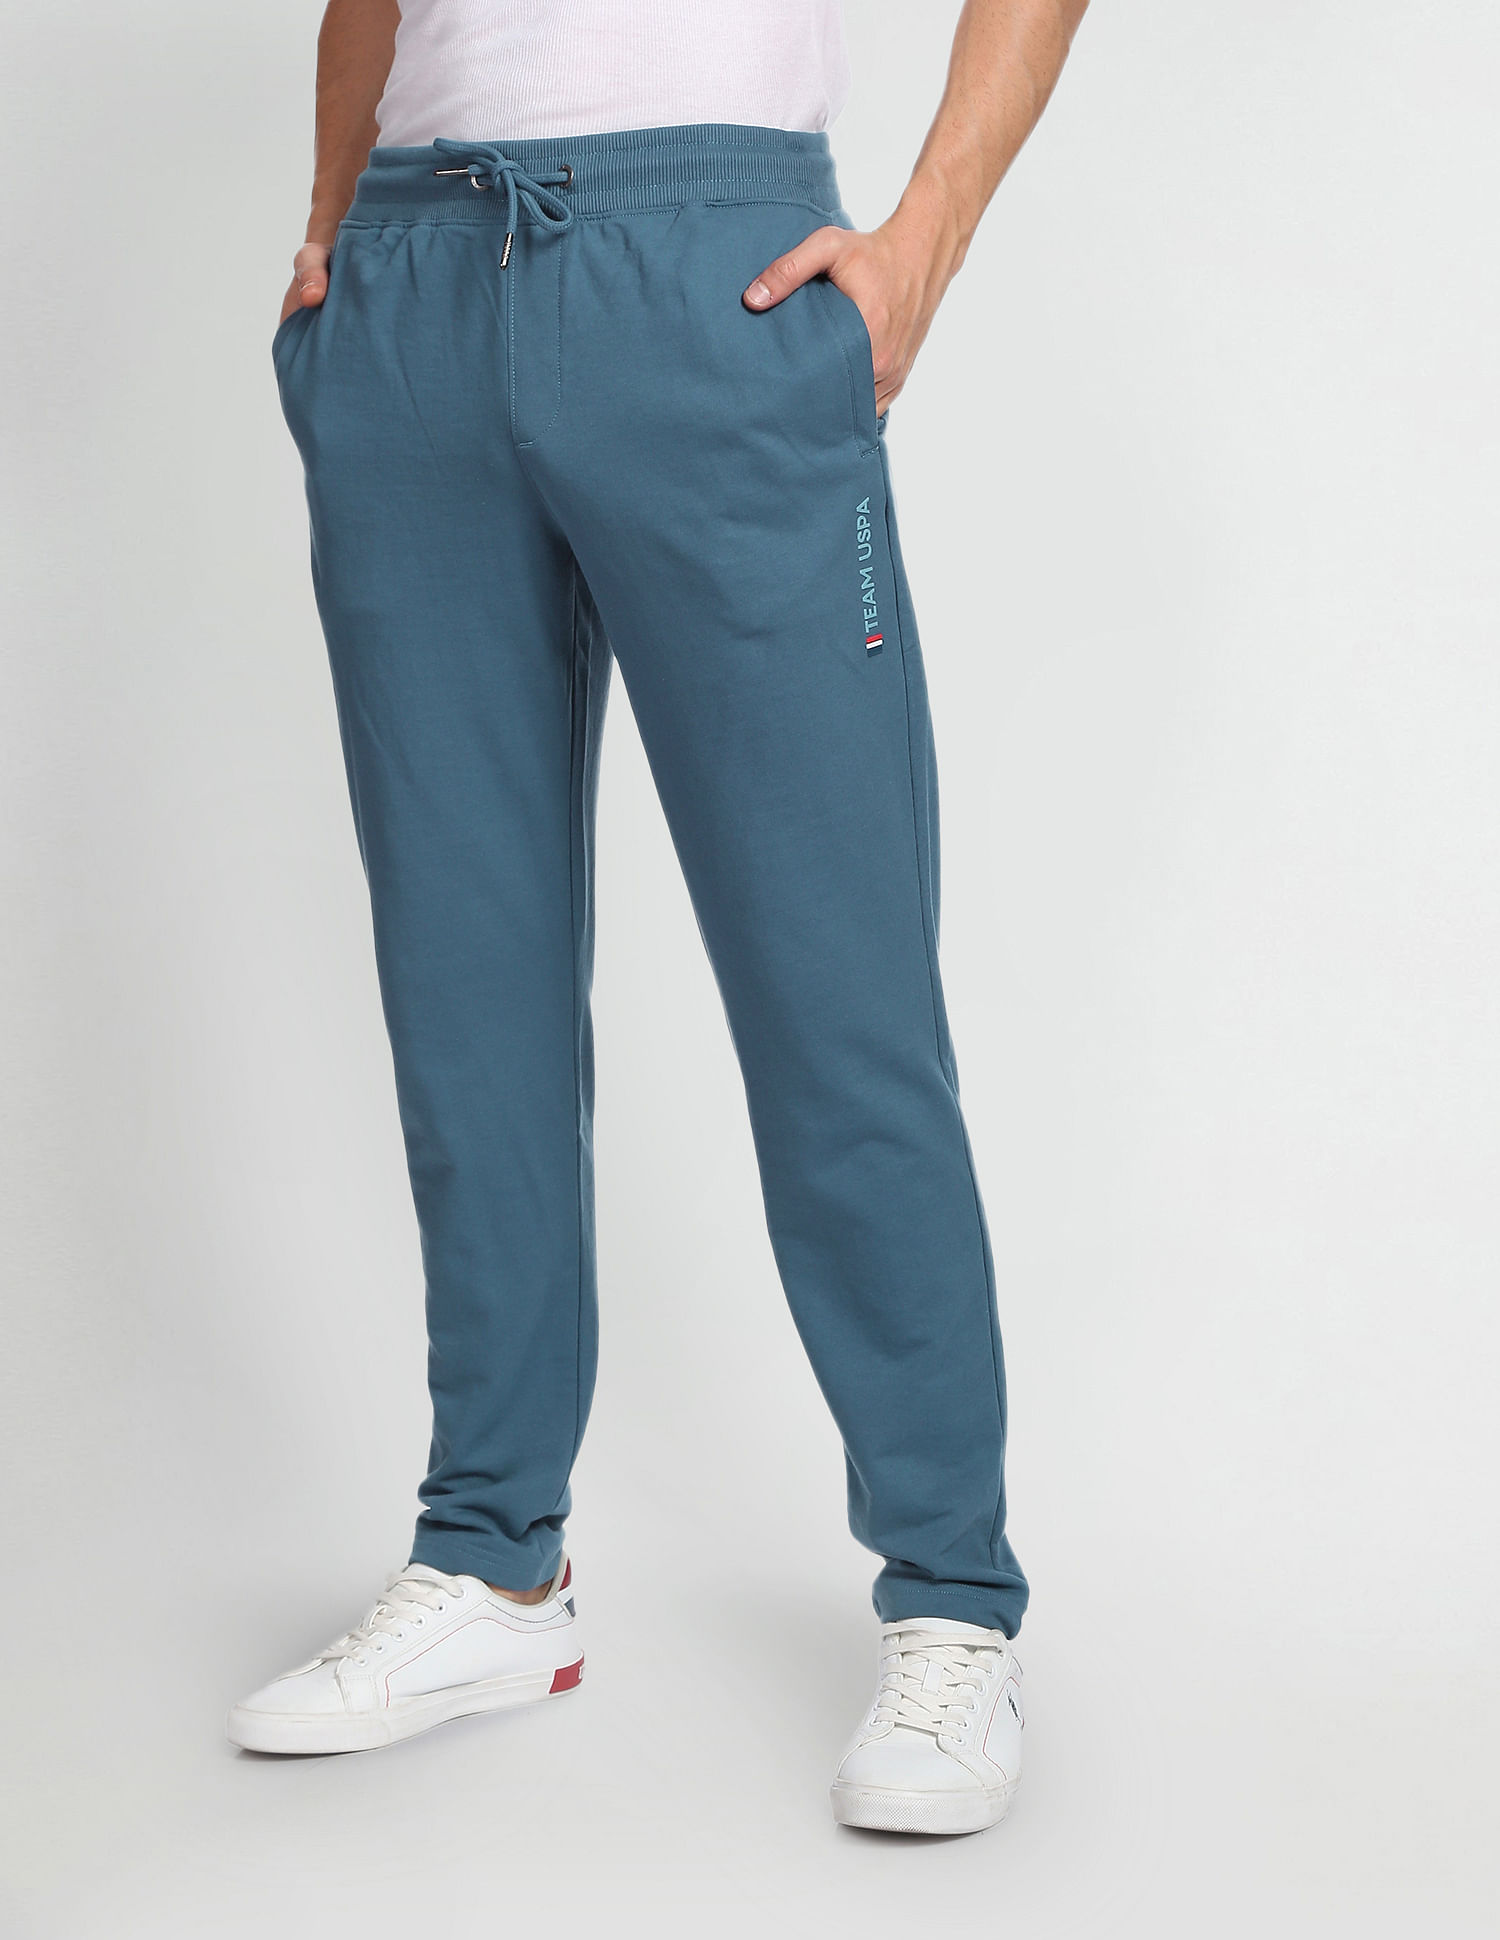 US Polo Assn. Men Activewear Pants for Men for sale | eBay